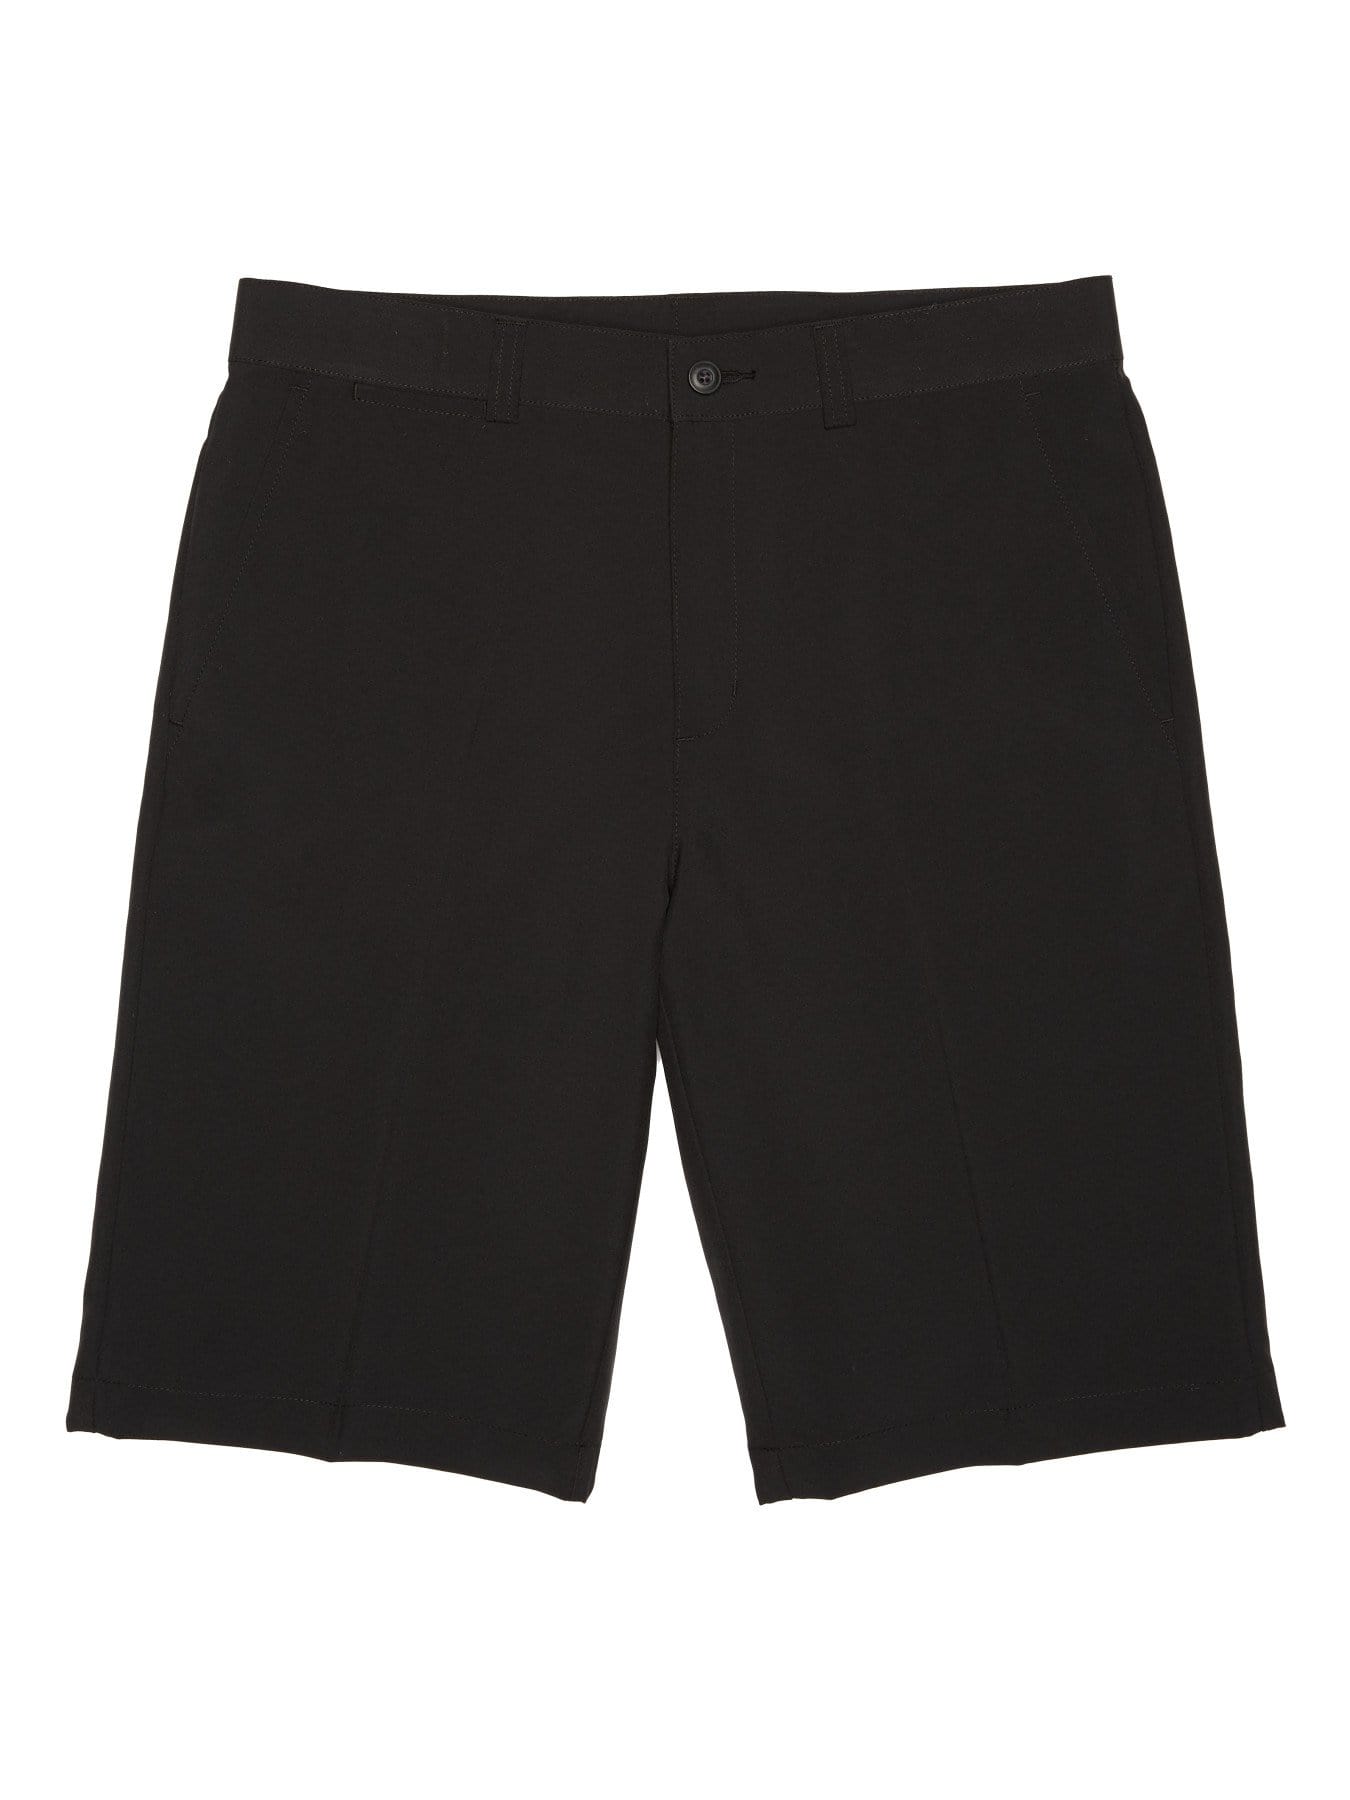 PGA TOUR Apparel Boys Flat Front Solid Golf Shorts, Size Large, Black, Polyester/Spandex | Golf Apparel Shop